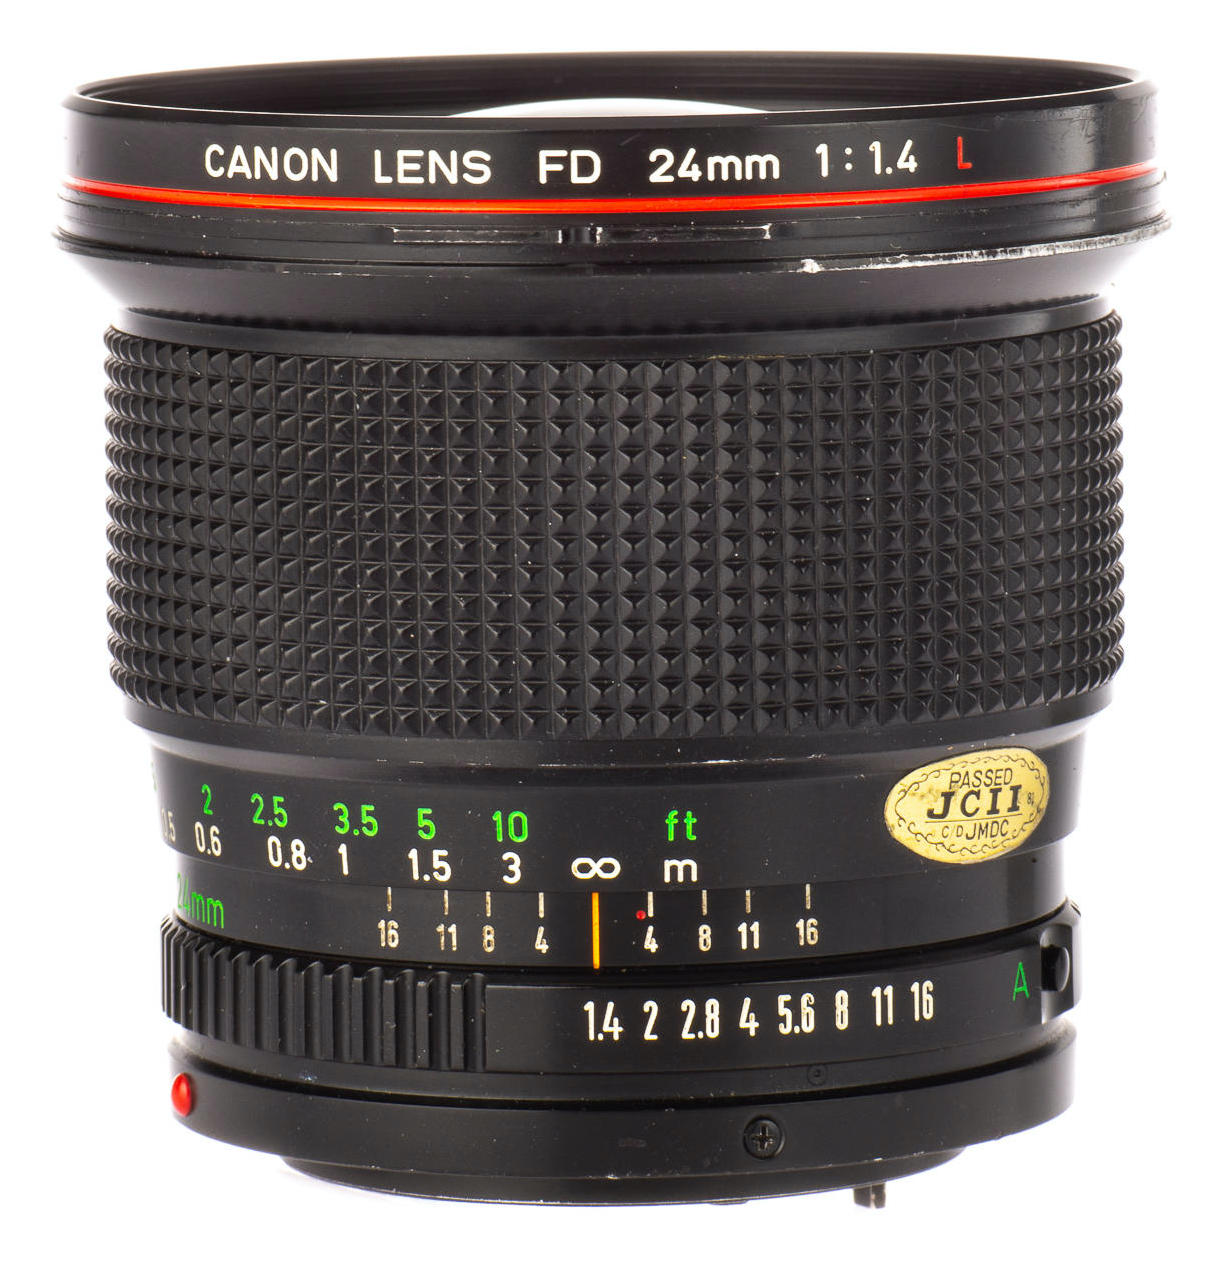 EN Canon Lens Wonderland system brochure booklet Guide Genuine AE-1 FD 